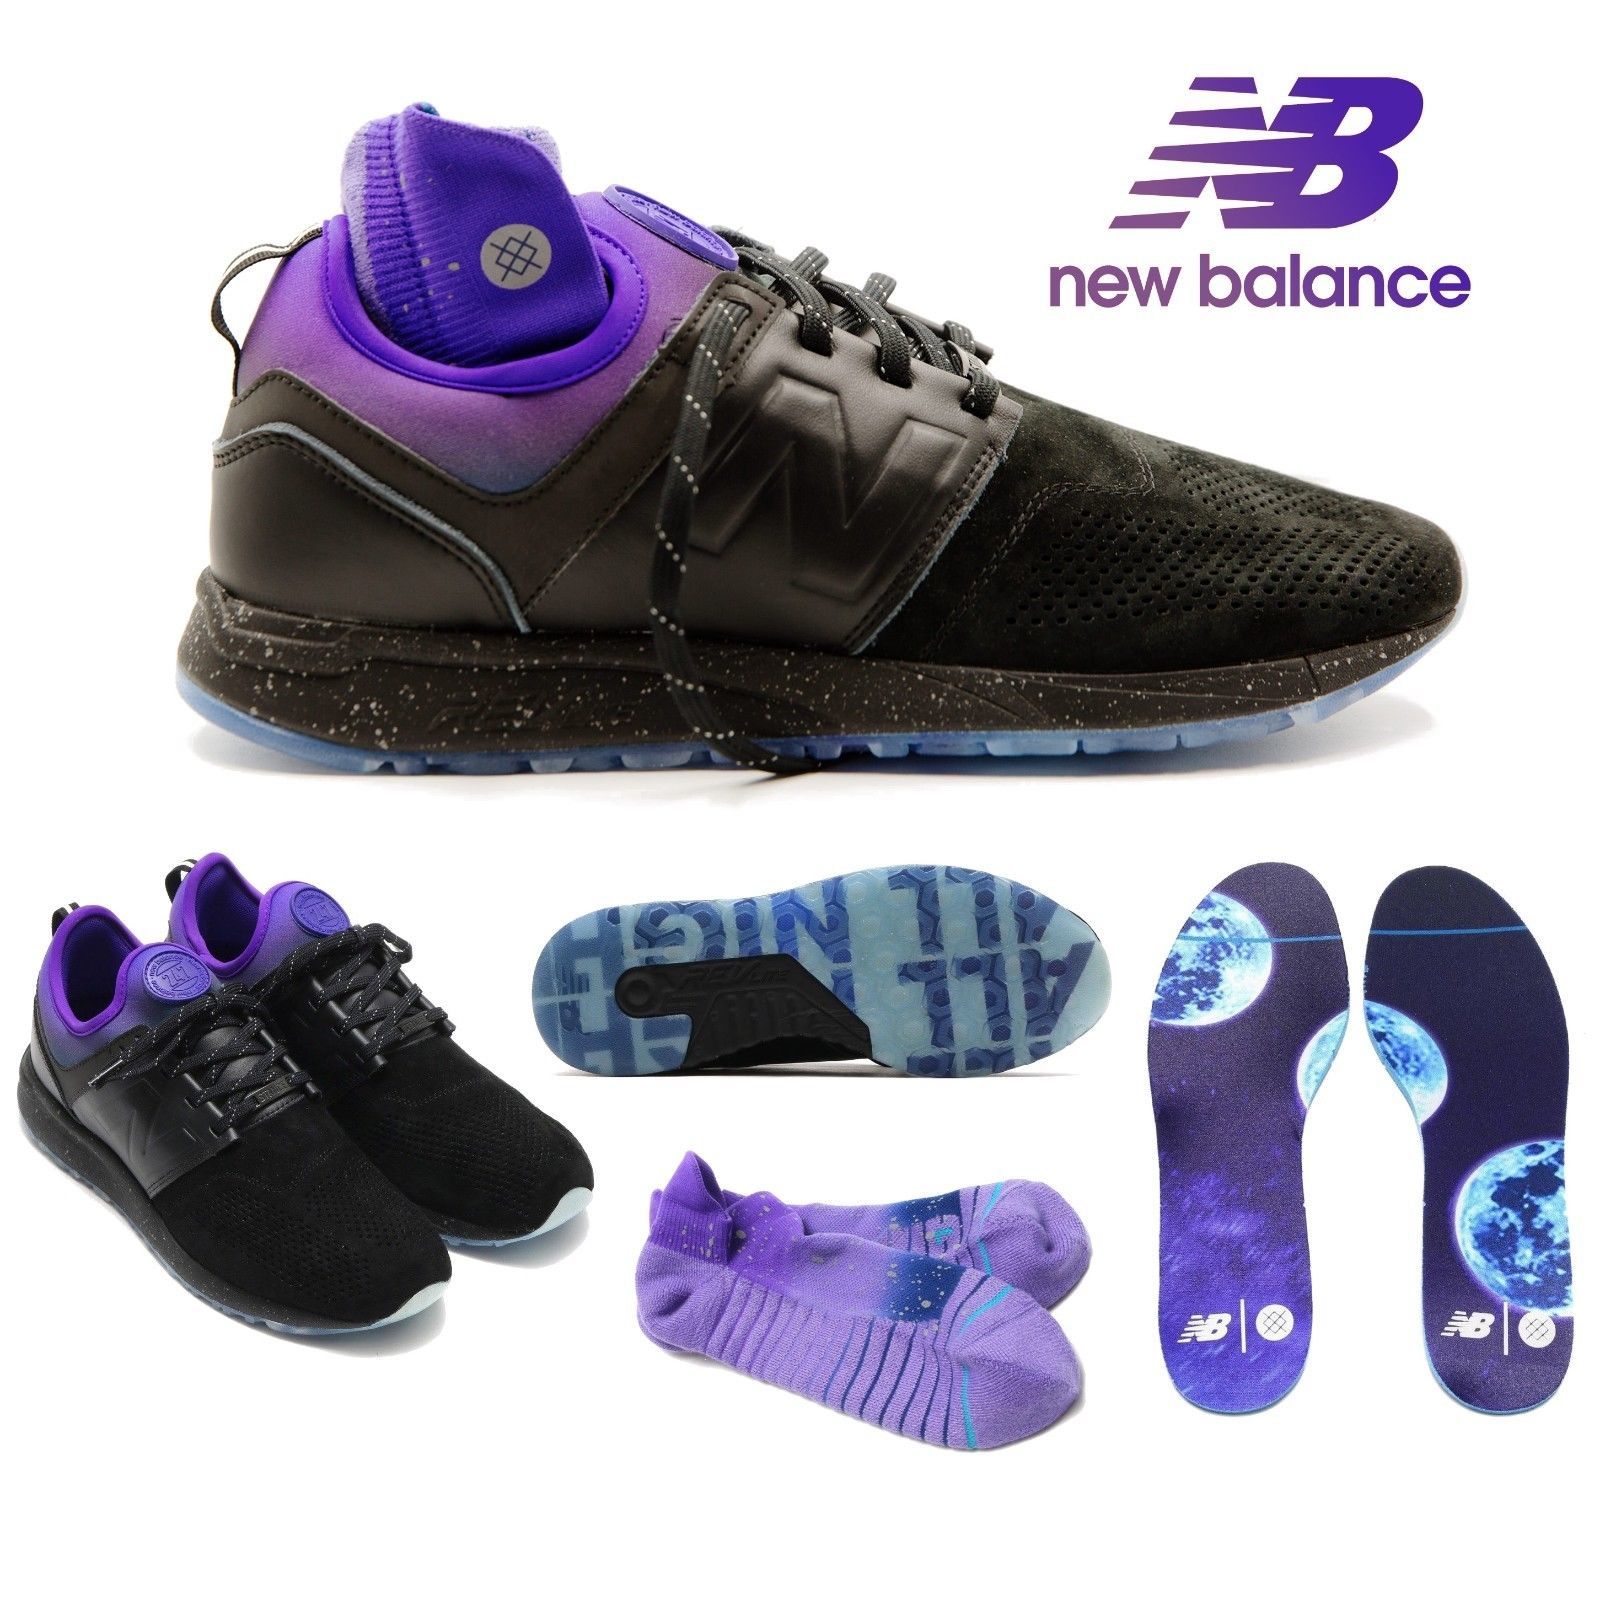 new balance 247 boot